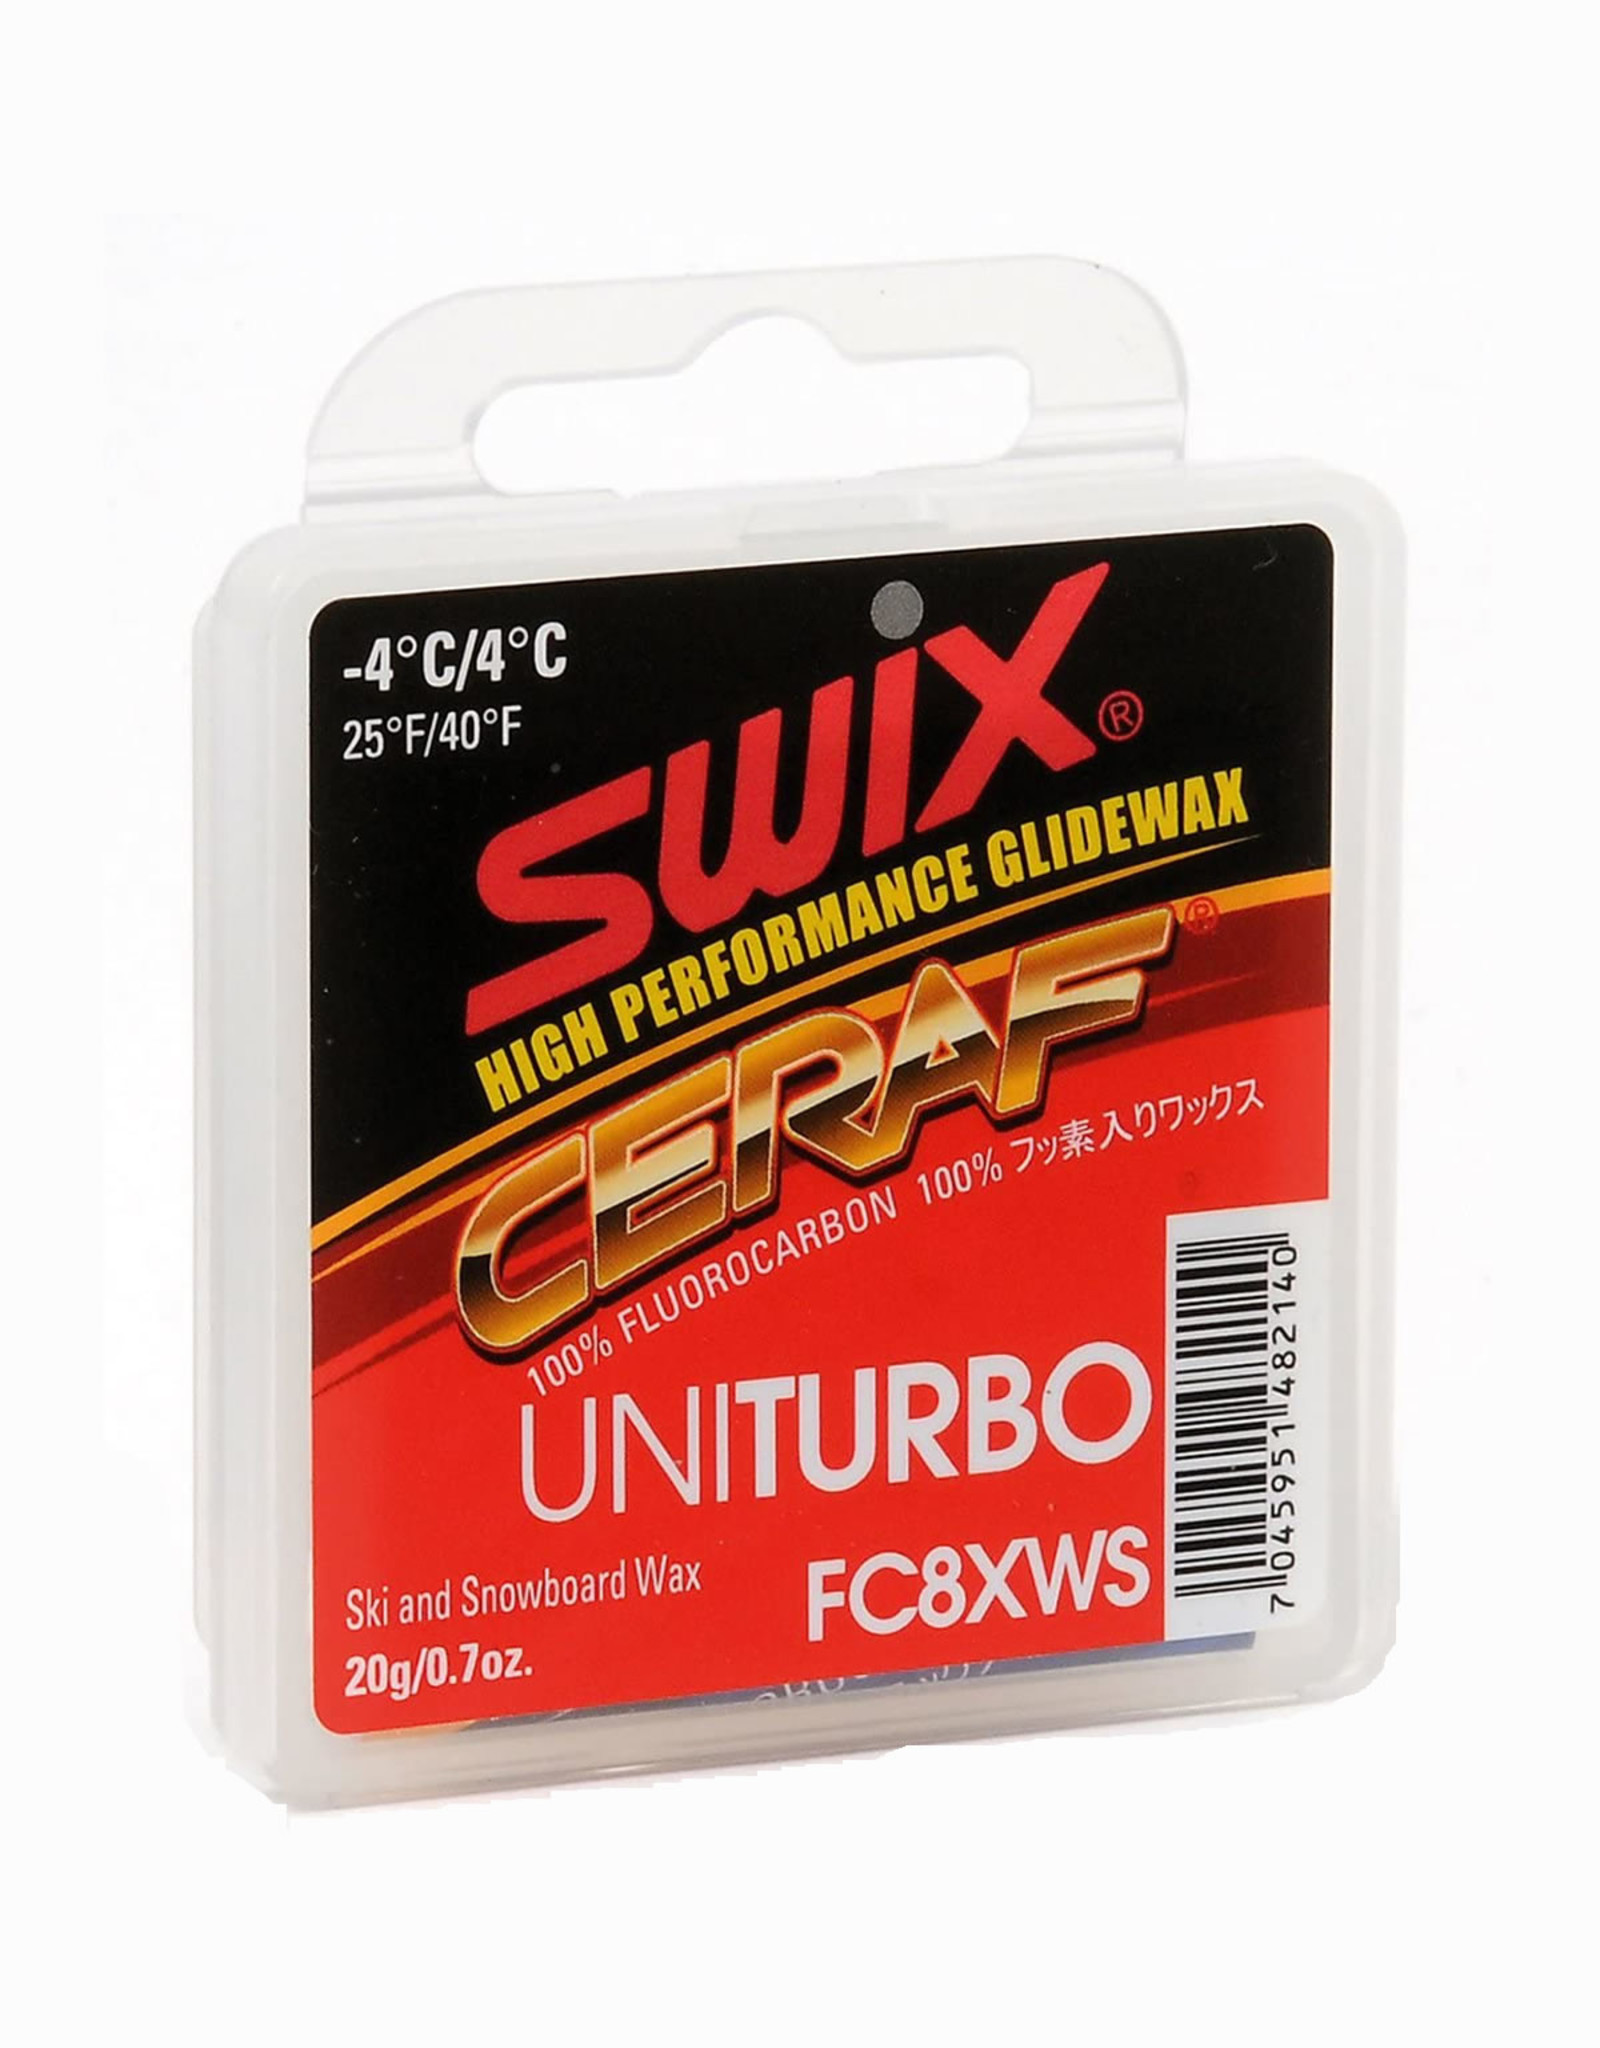 Swix Swix Cera F Turbo 20g 4 to -4